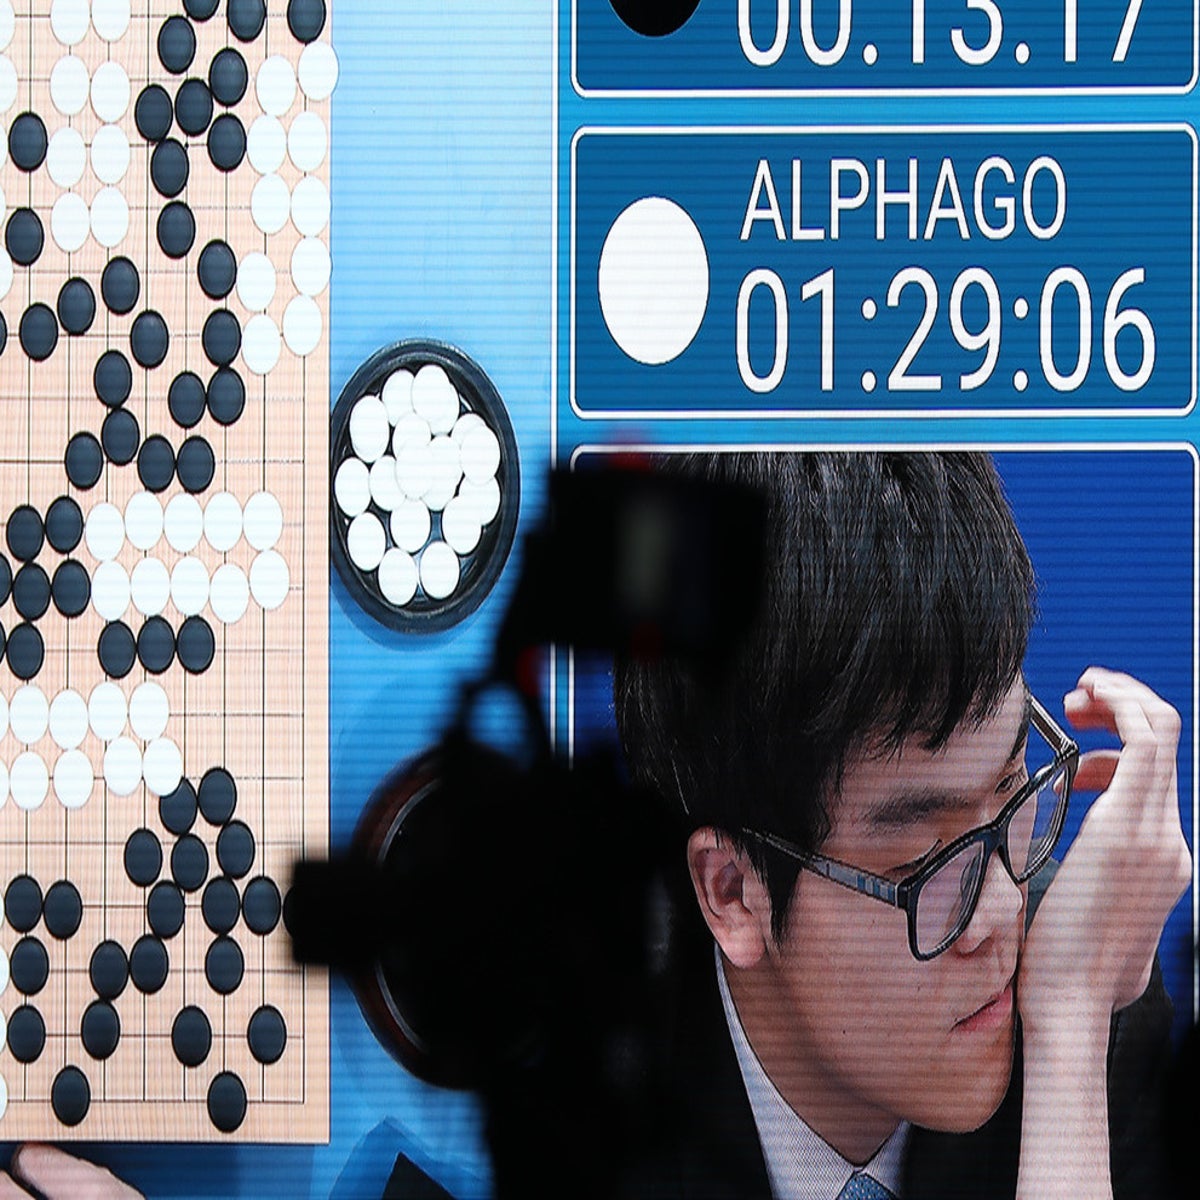 Twenty years on from Deep Blue vs Kasparov: how a chess match started the  big data revolution